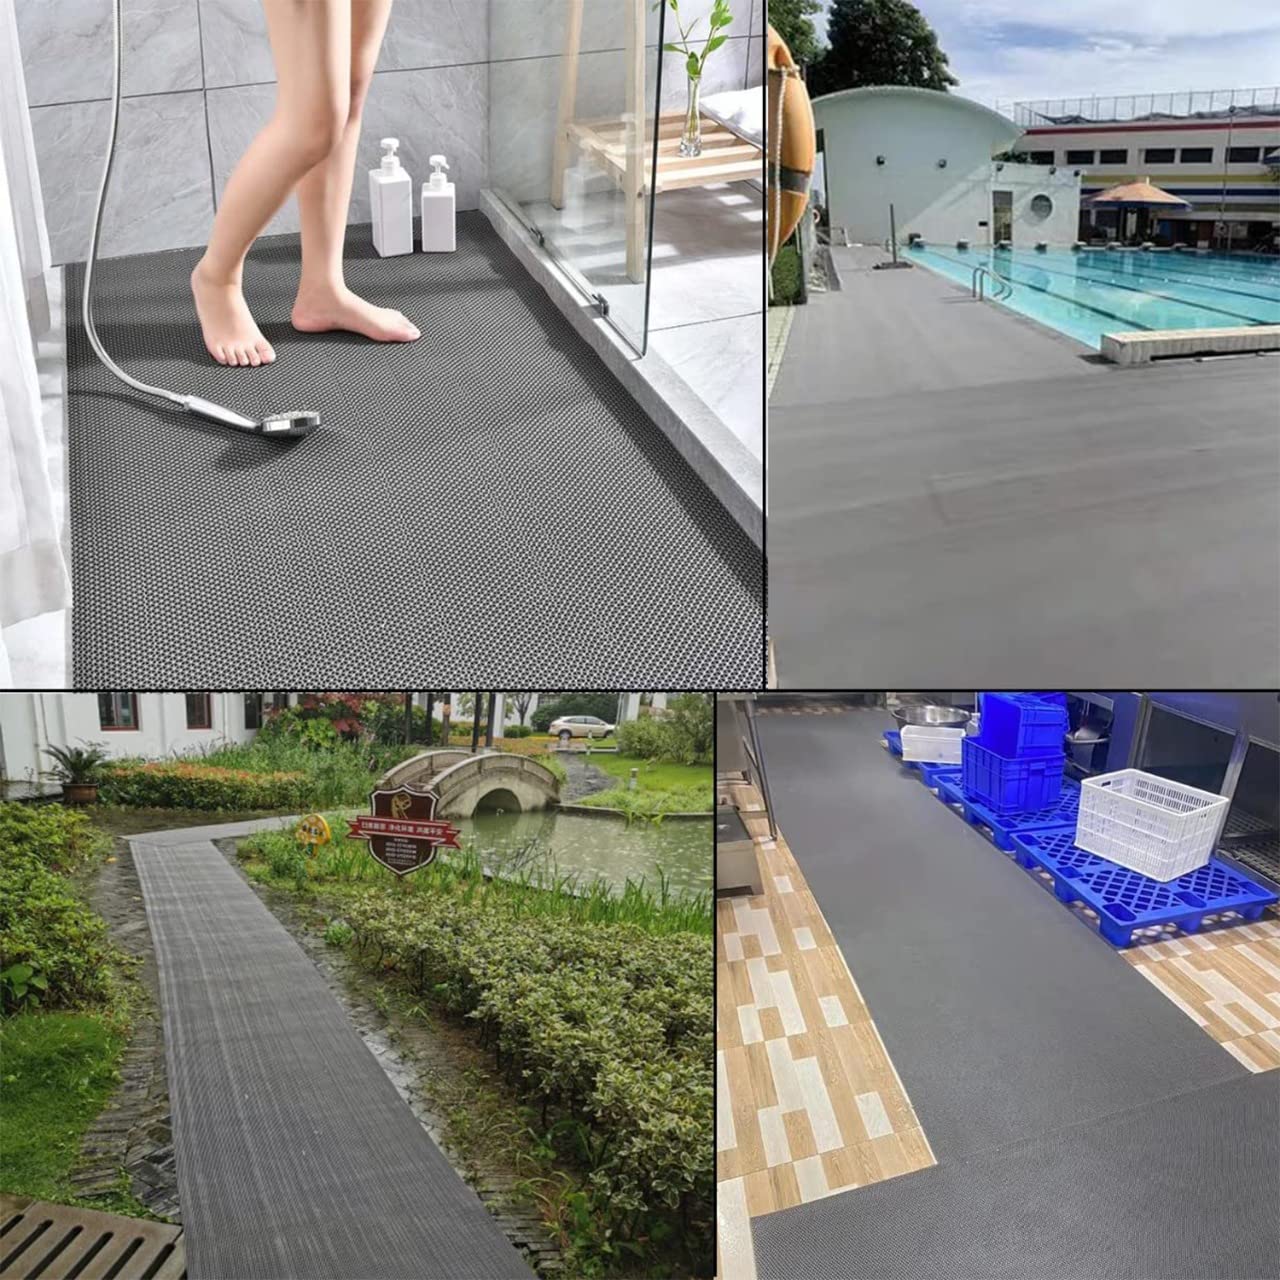 Anti-Skid mat Multipurpose Commercial PVC Floor Mat for Bathroom, Kitchen, Swimming Pool - Grey